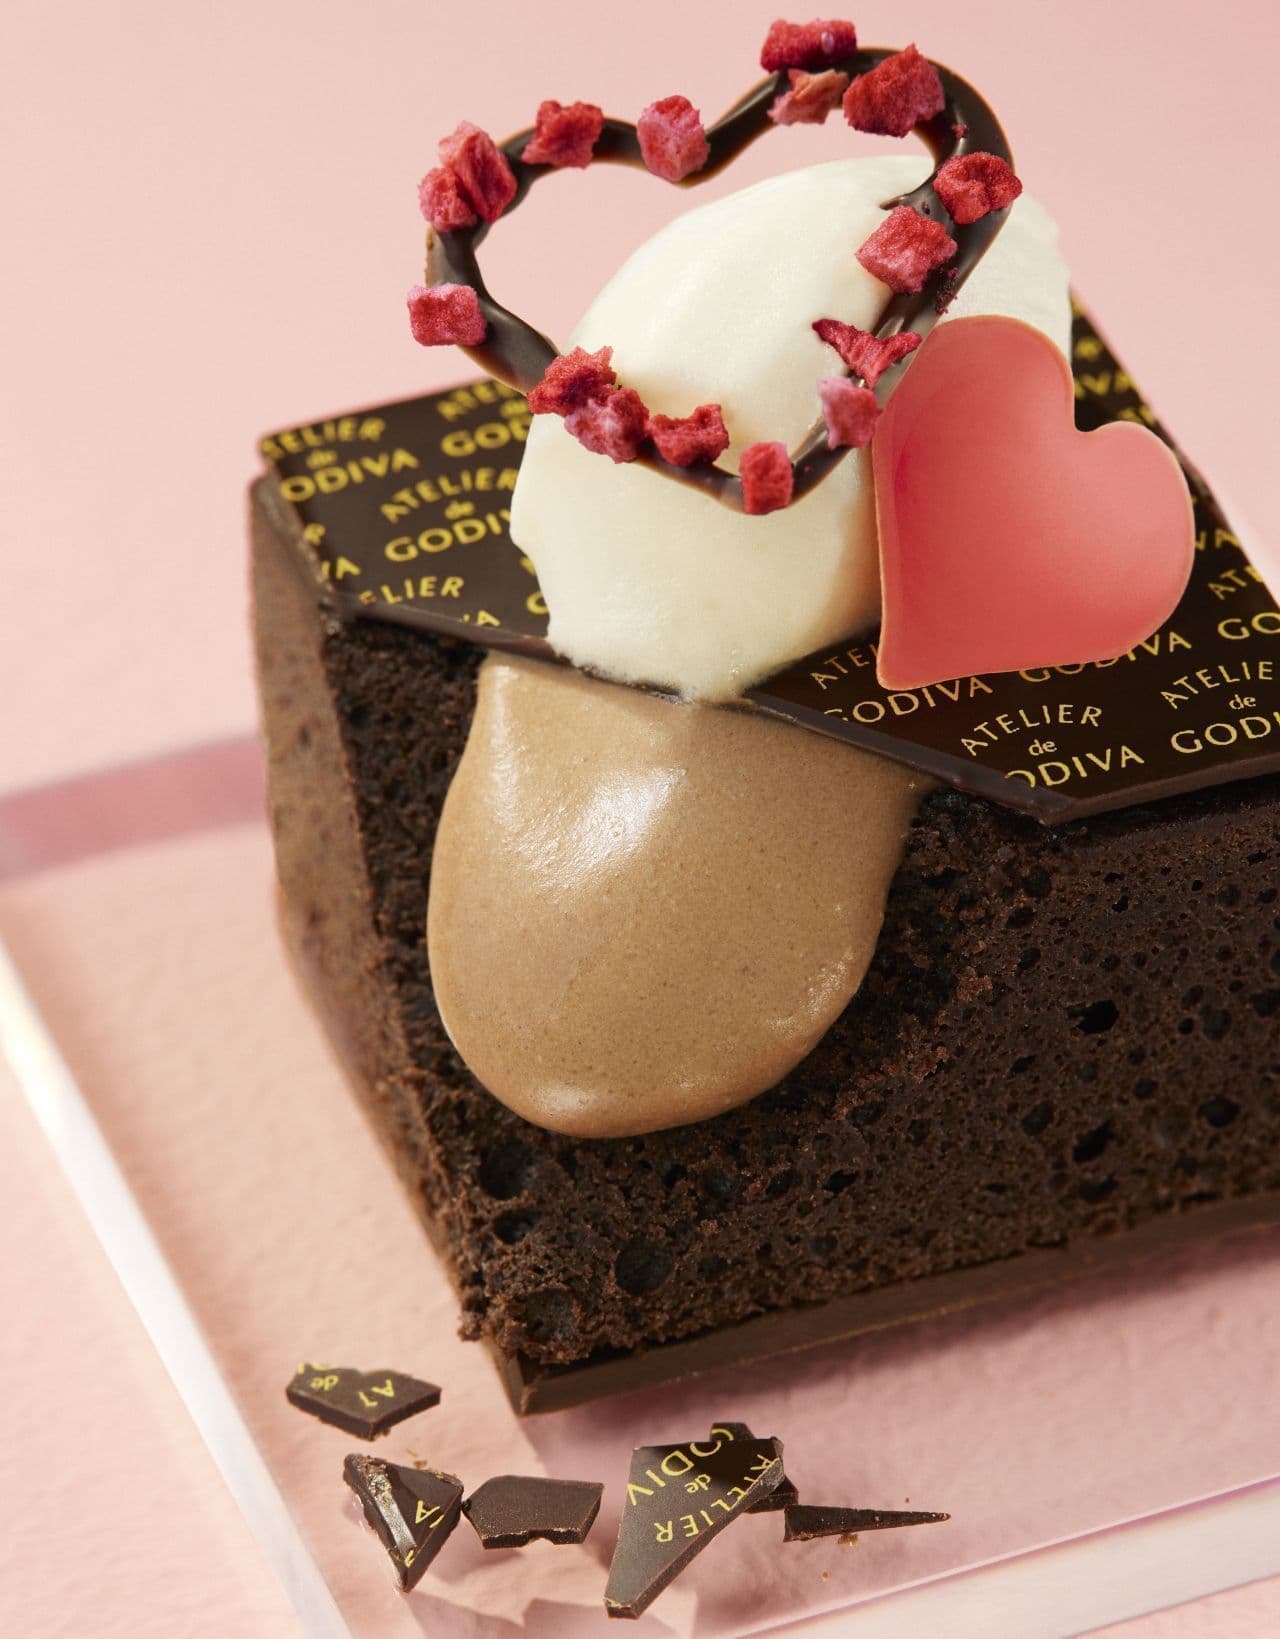 Godiva's "ATELIER de GODIVA" offers limited-edition Valentine's Day sweets